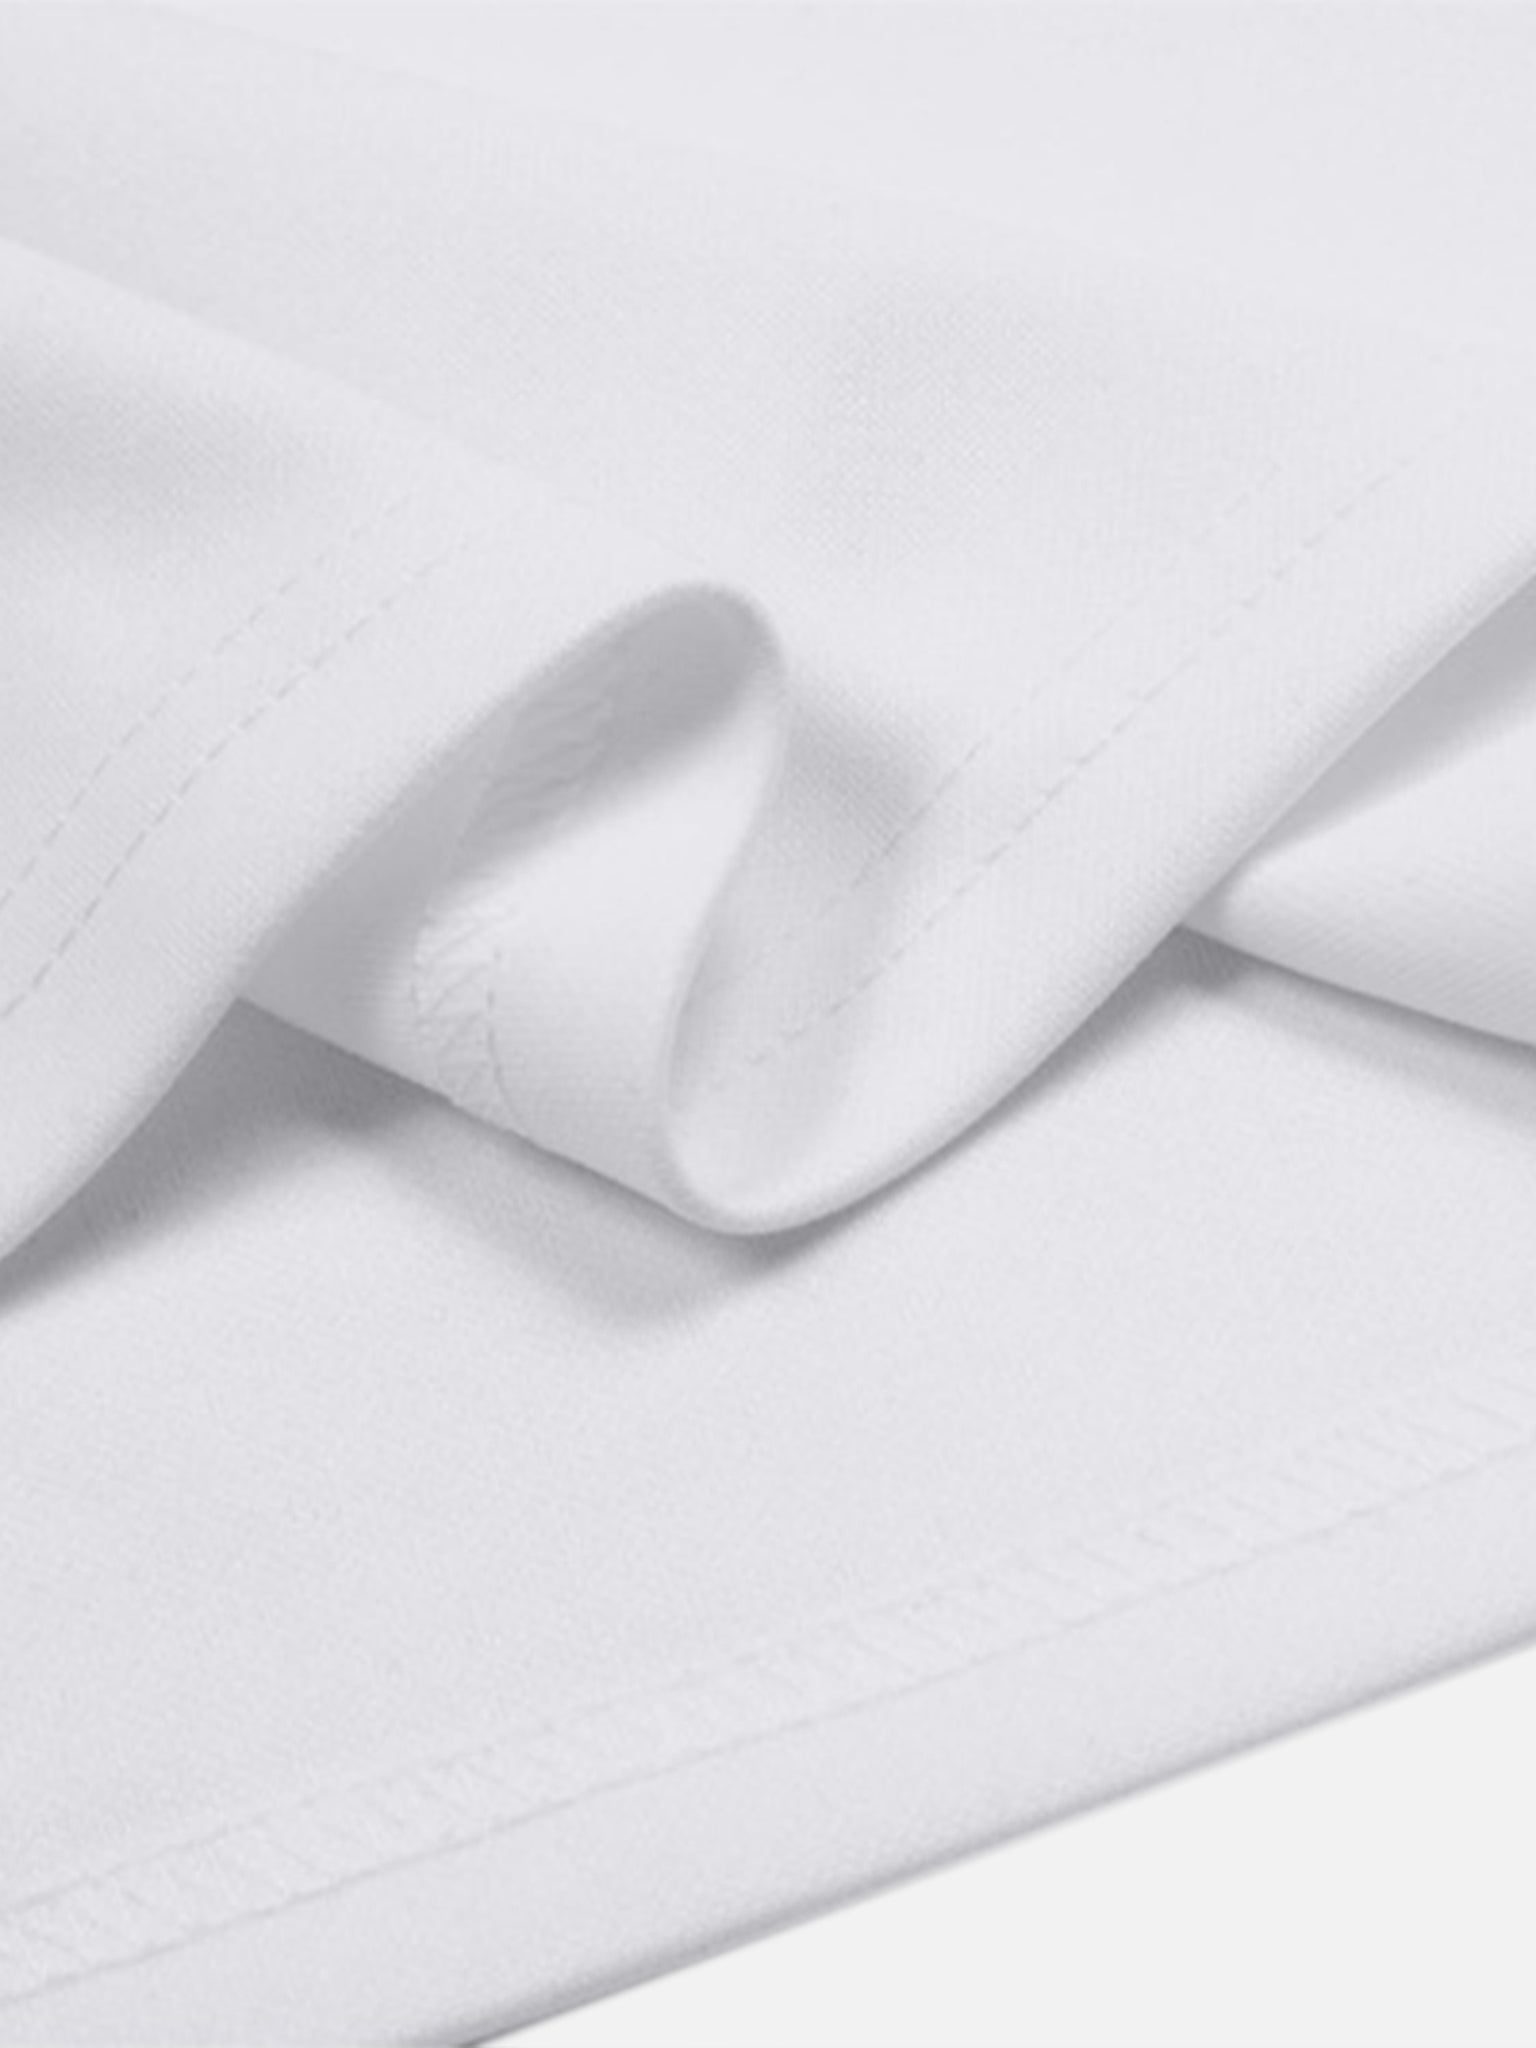 The Supermade V-neck Digital Fabric Embroidered Long Sleeve Sweatshirt - 1684